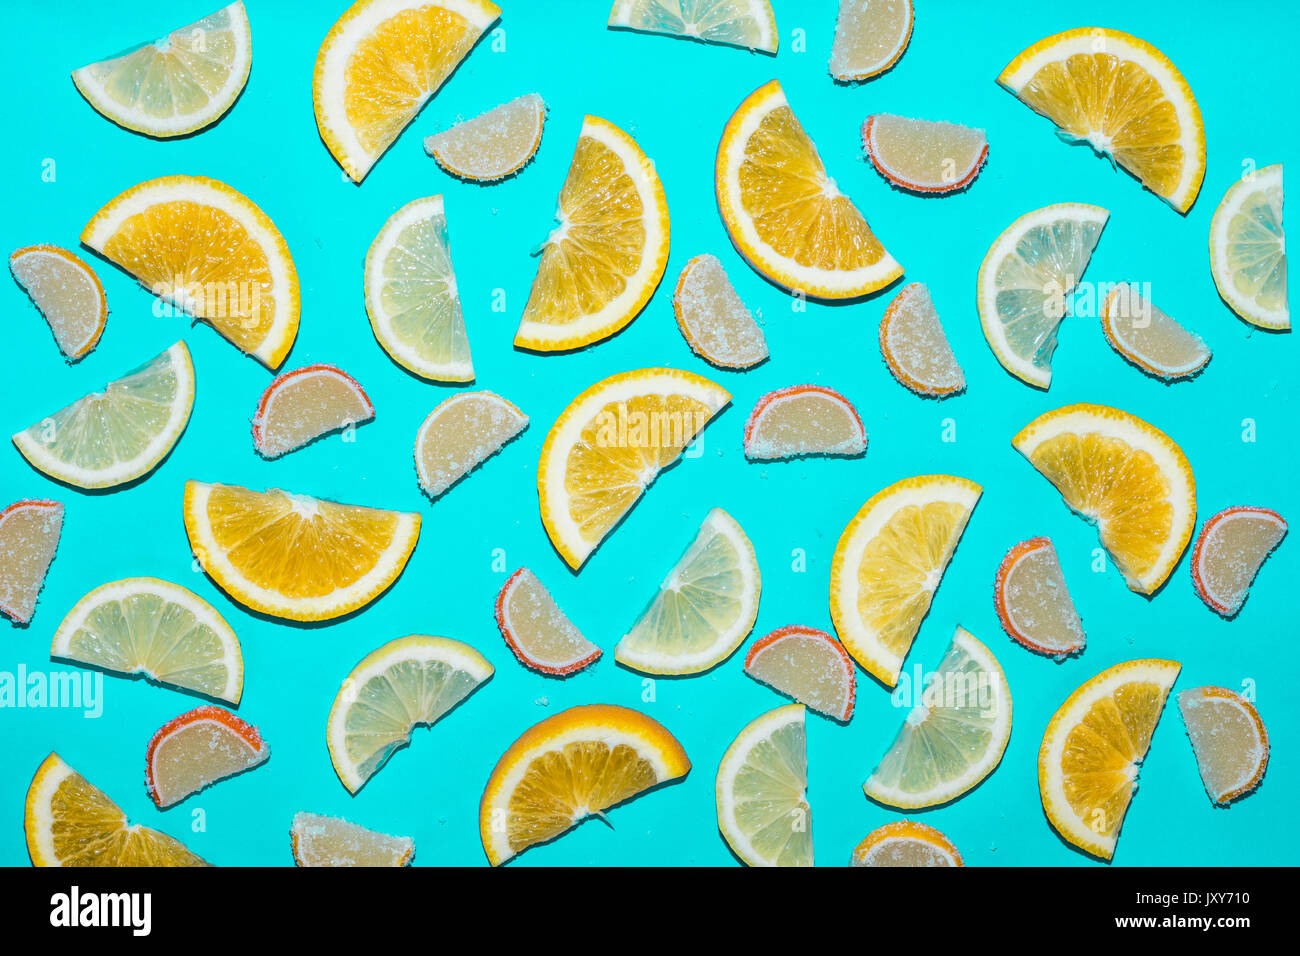 Orange and lemon slices and sweets on blue background Stock Photo